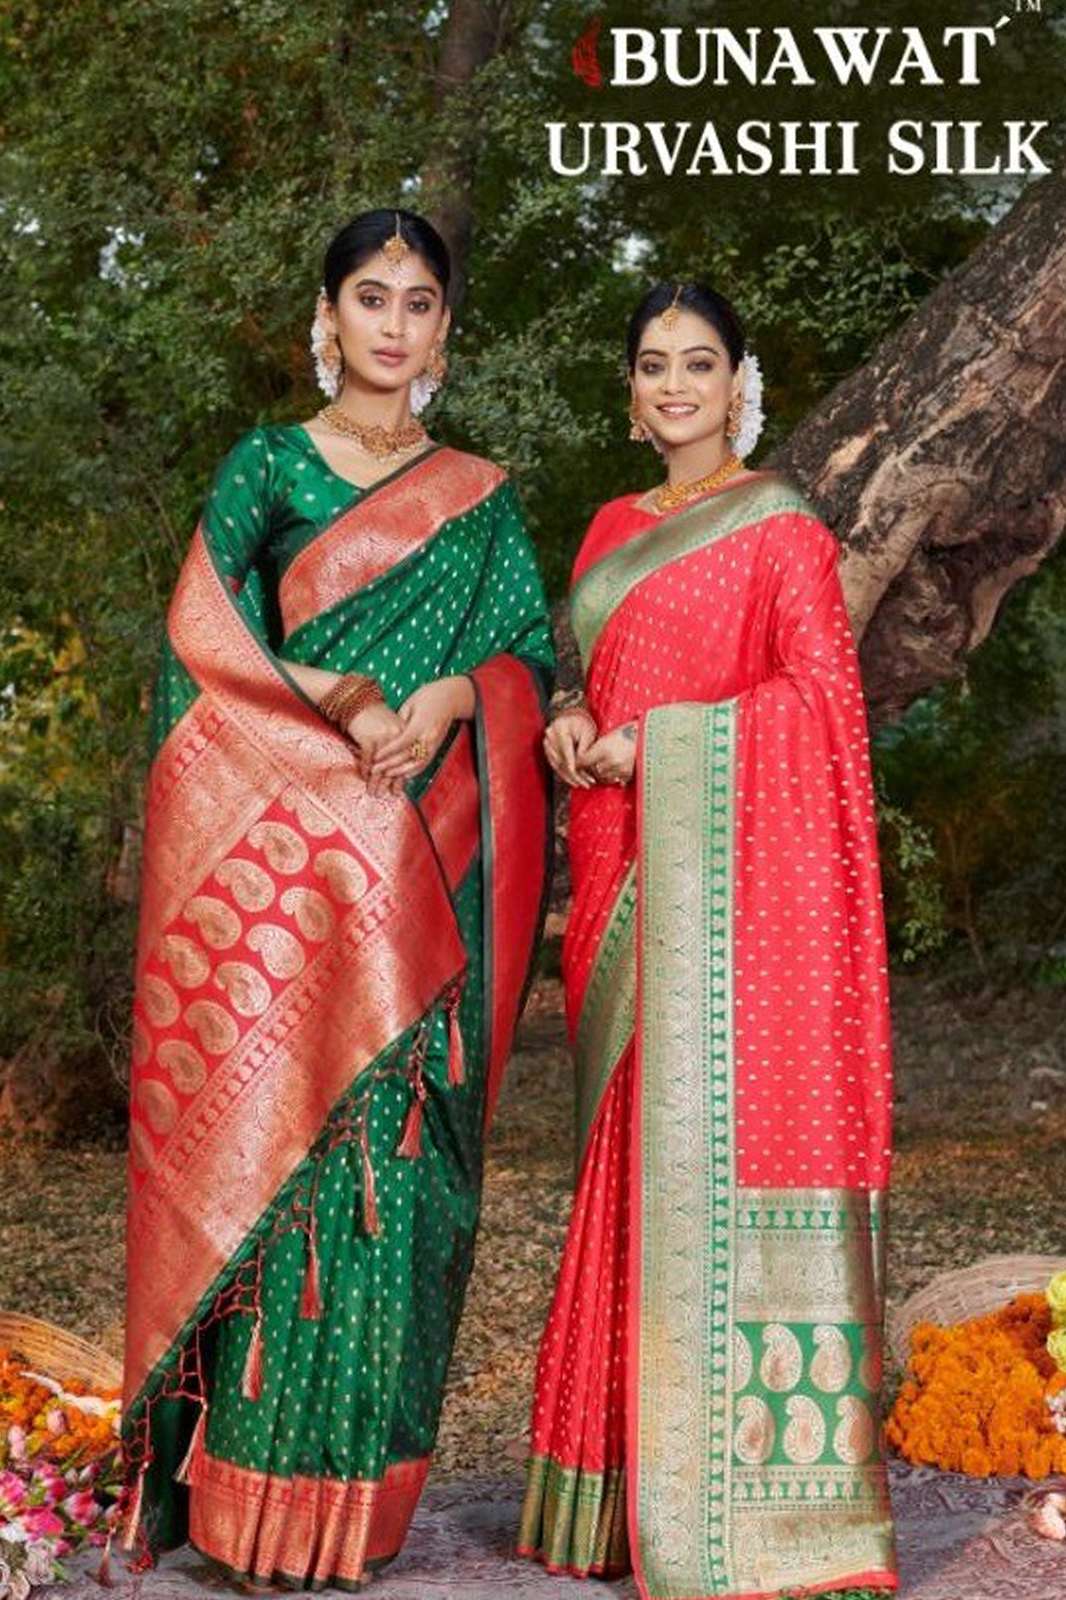 BUNAWAT 6014 URVASHI SILK Latest Banarasi Silk Saree  Collection